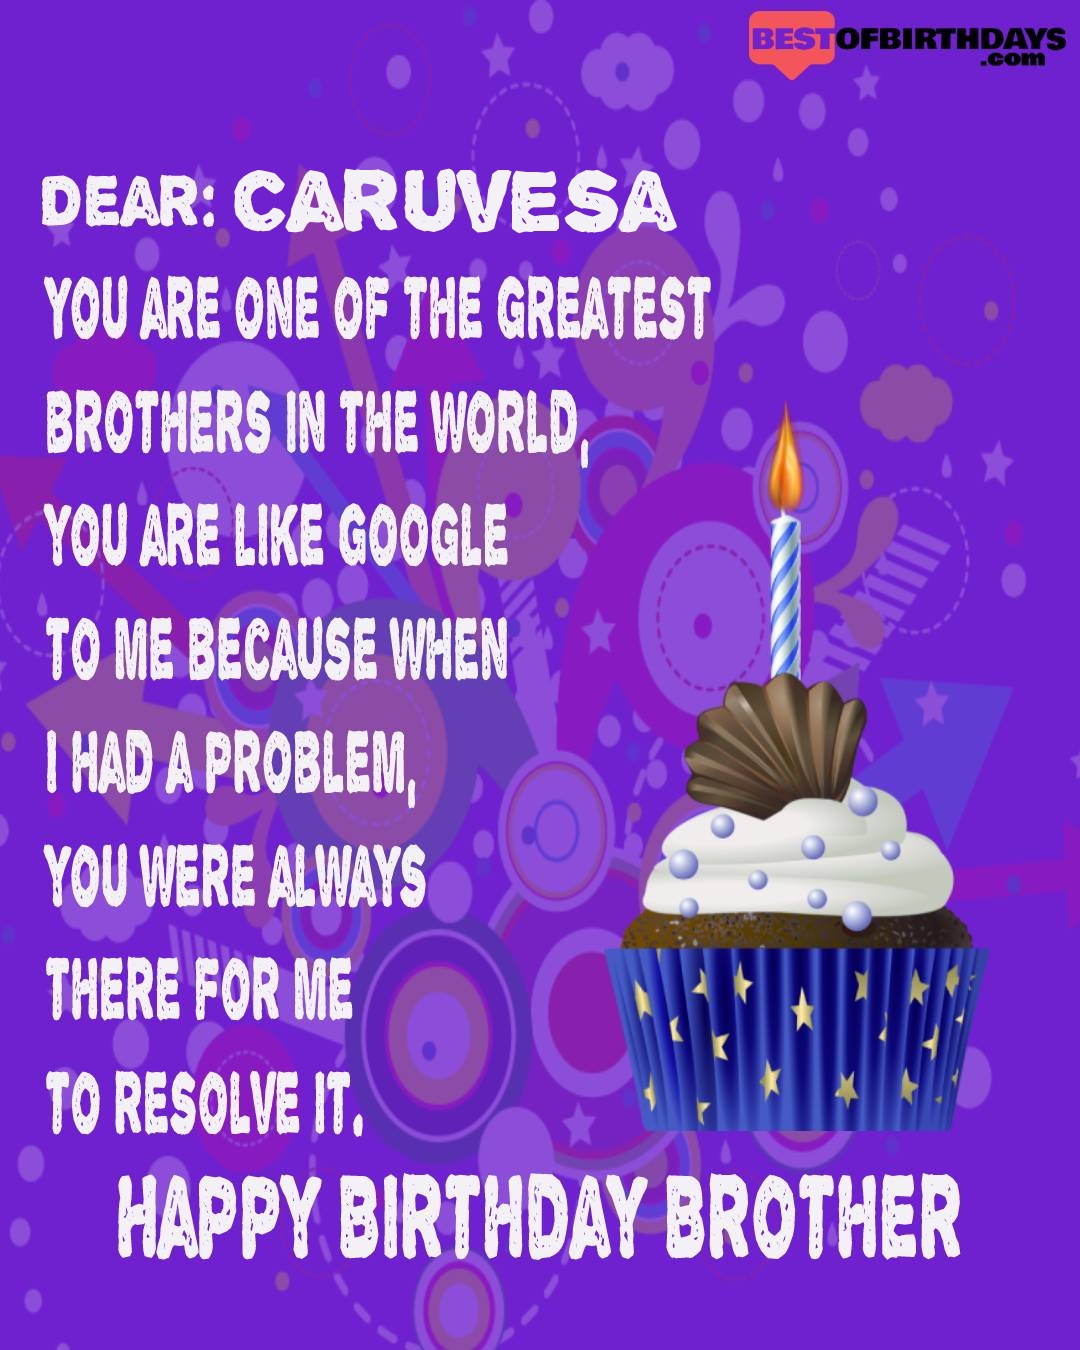 Happy birthday caruvesa bhai brother bro